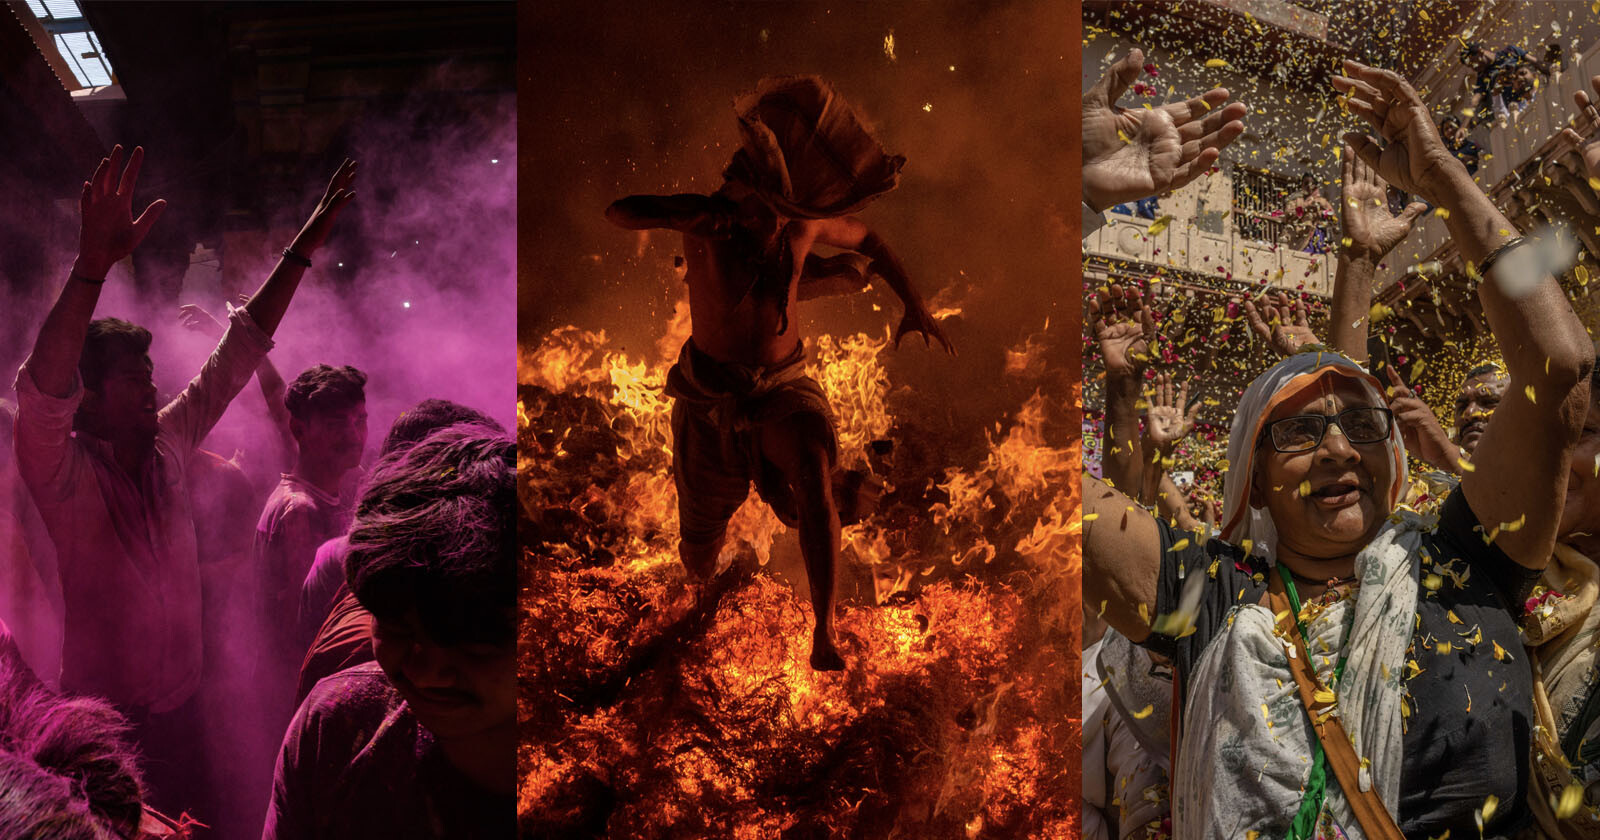  fire love photographer captures world most photogenic 